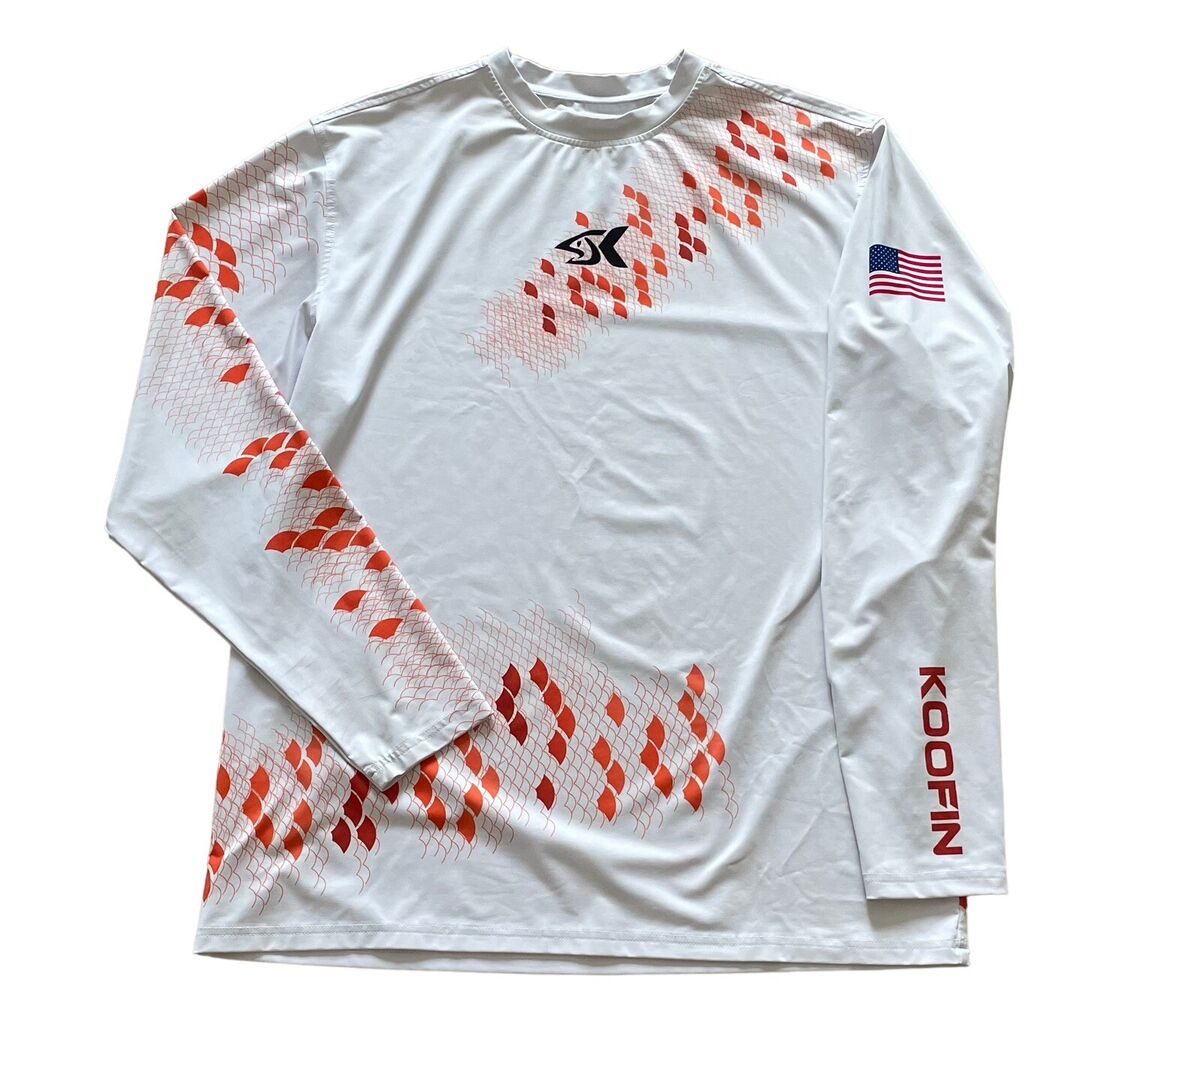 Koofin Gear Mens XL Performance White Orange Long Sleeve Fishing Shirt